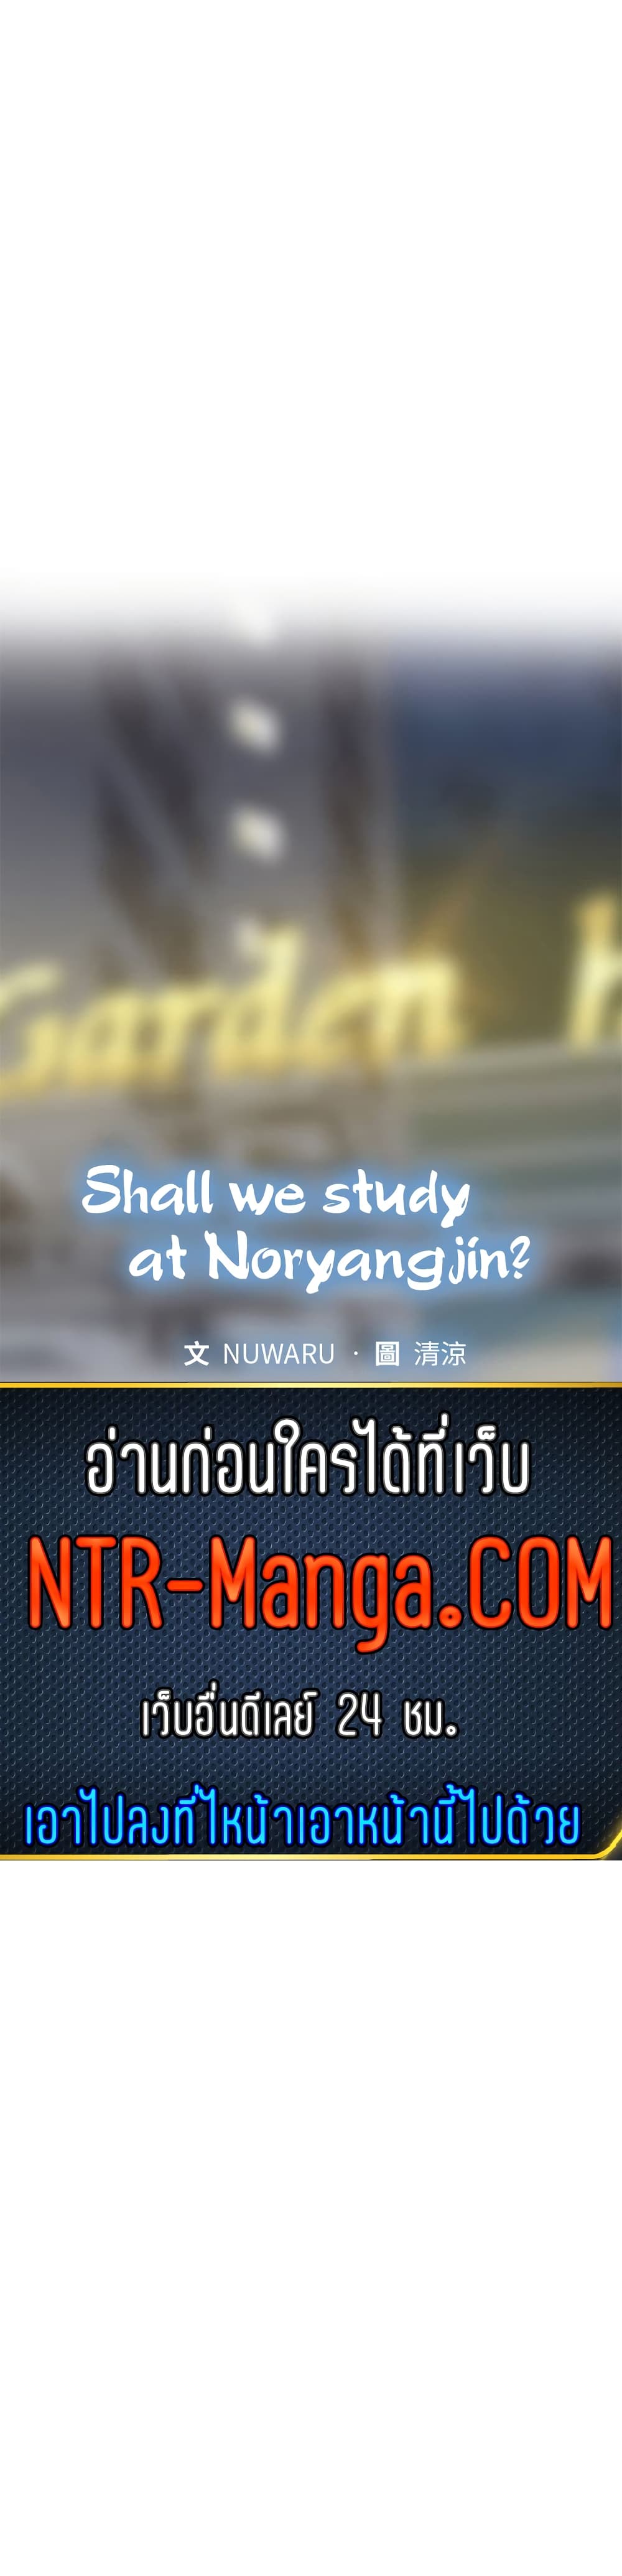 Should I Study at Noryangjin? 75-75